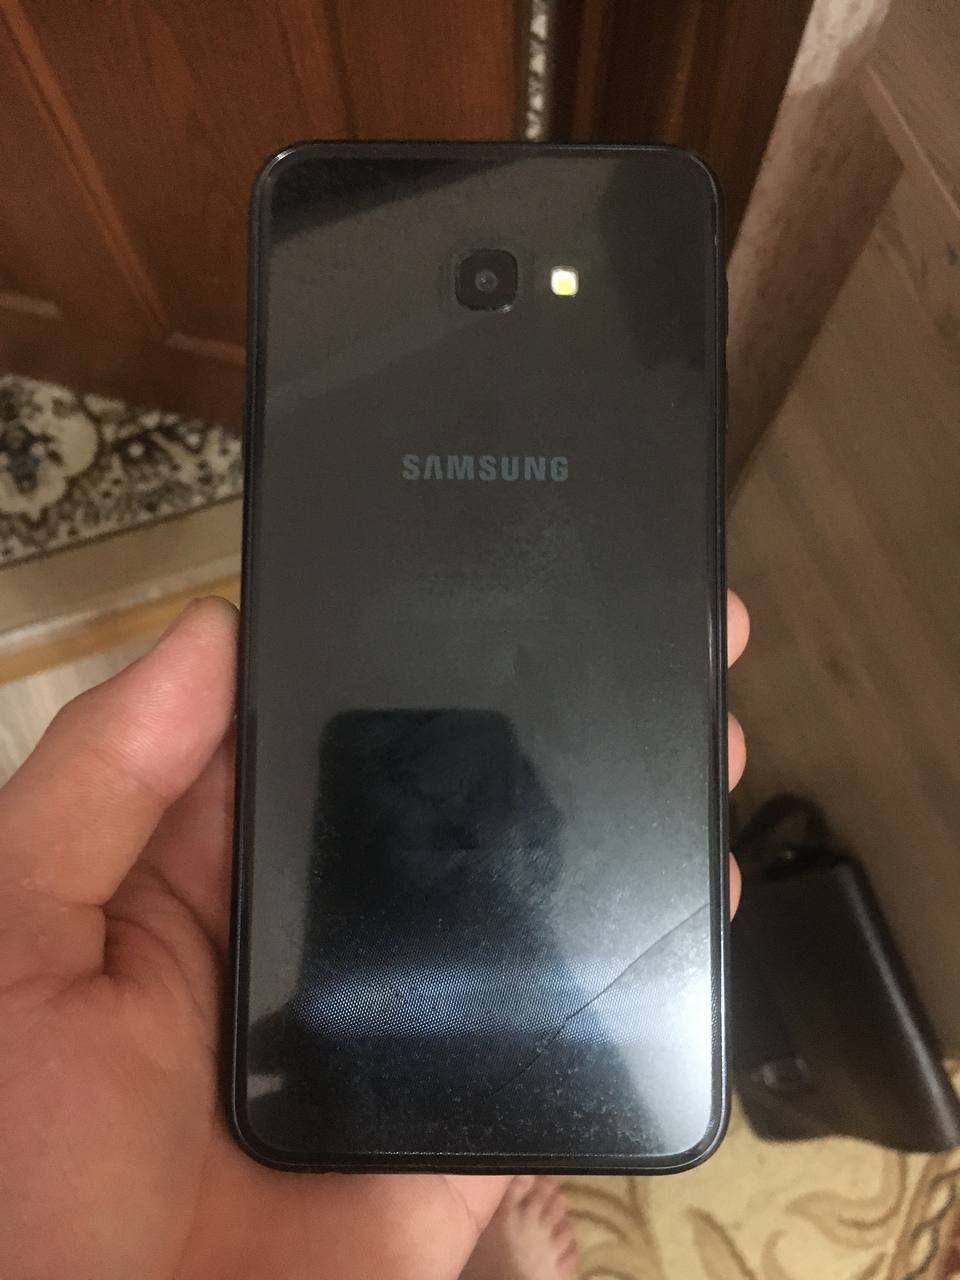 Samsung Galaxy J4 plus